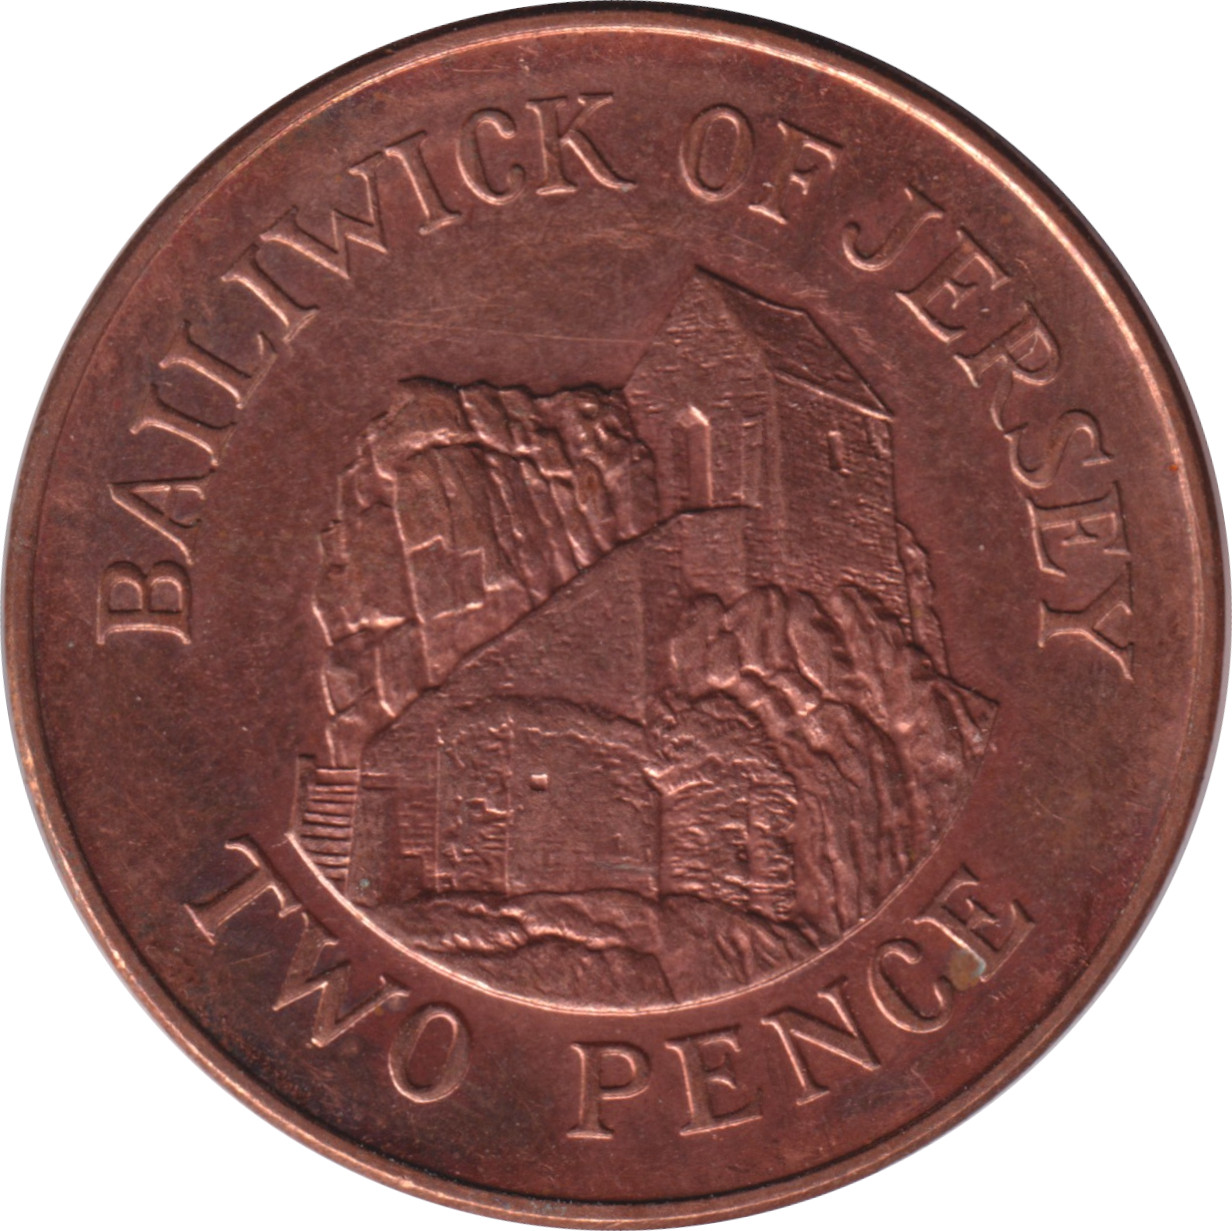 2 pence - Elizabeth II - Old head